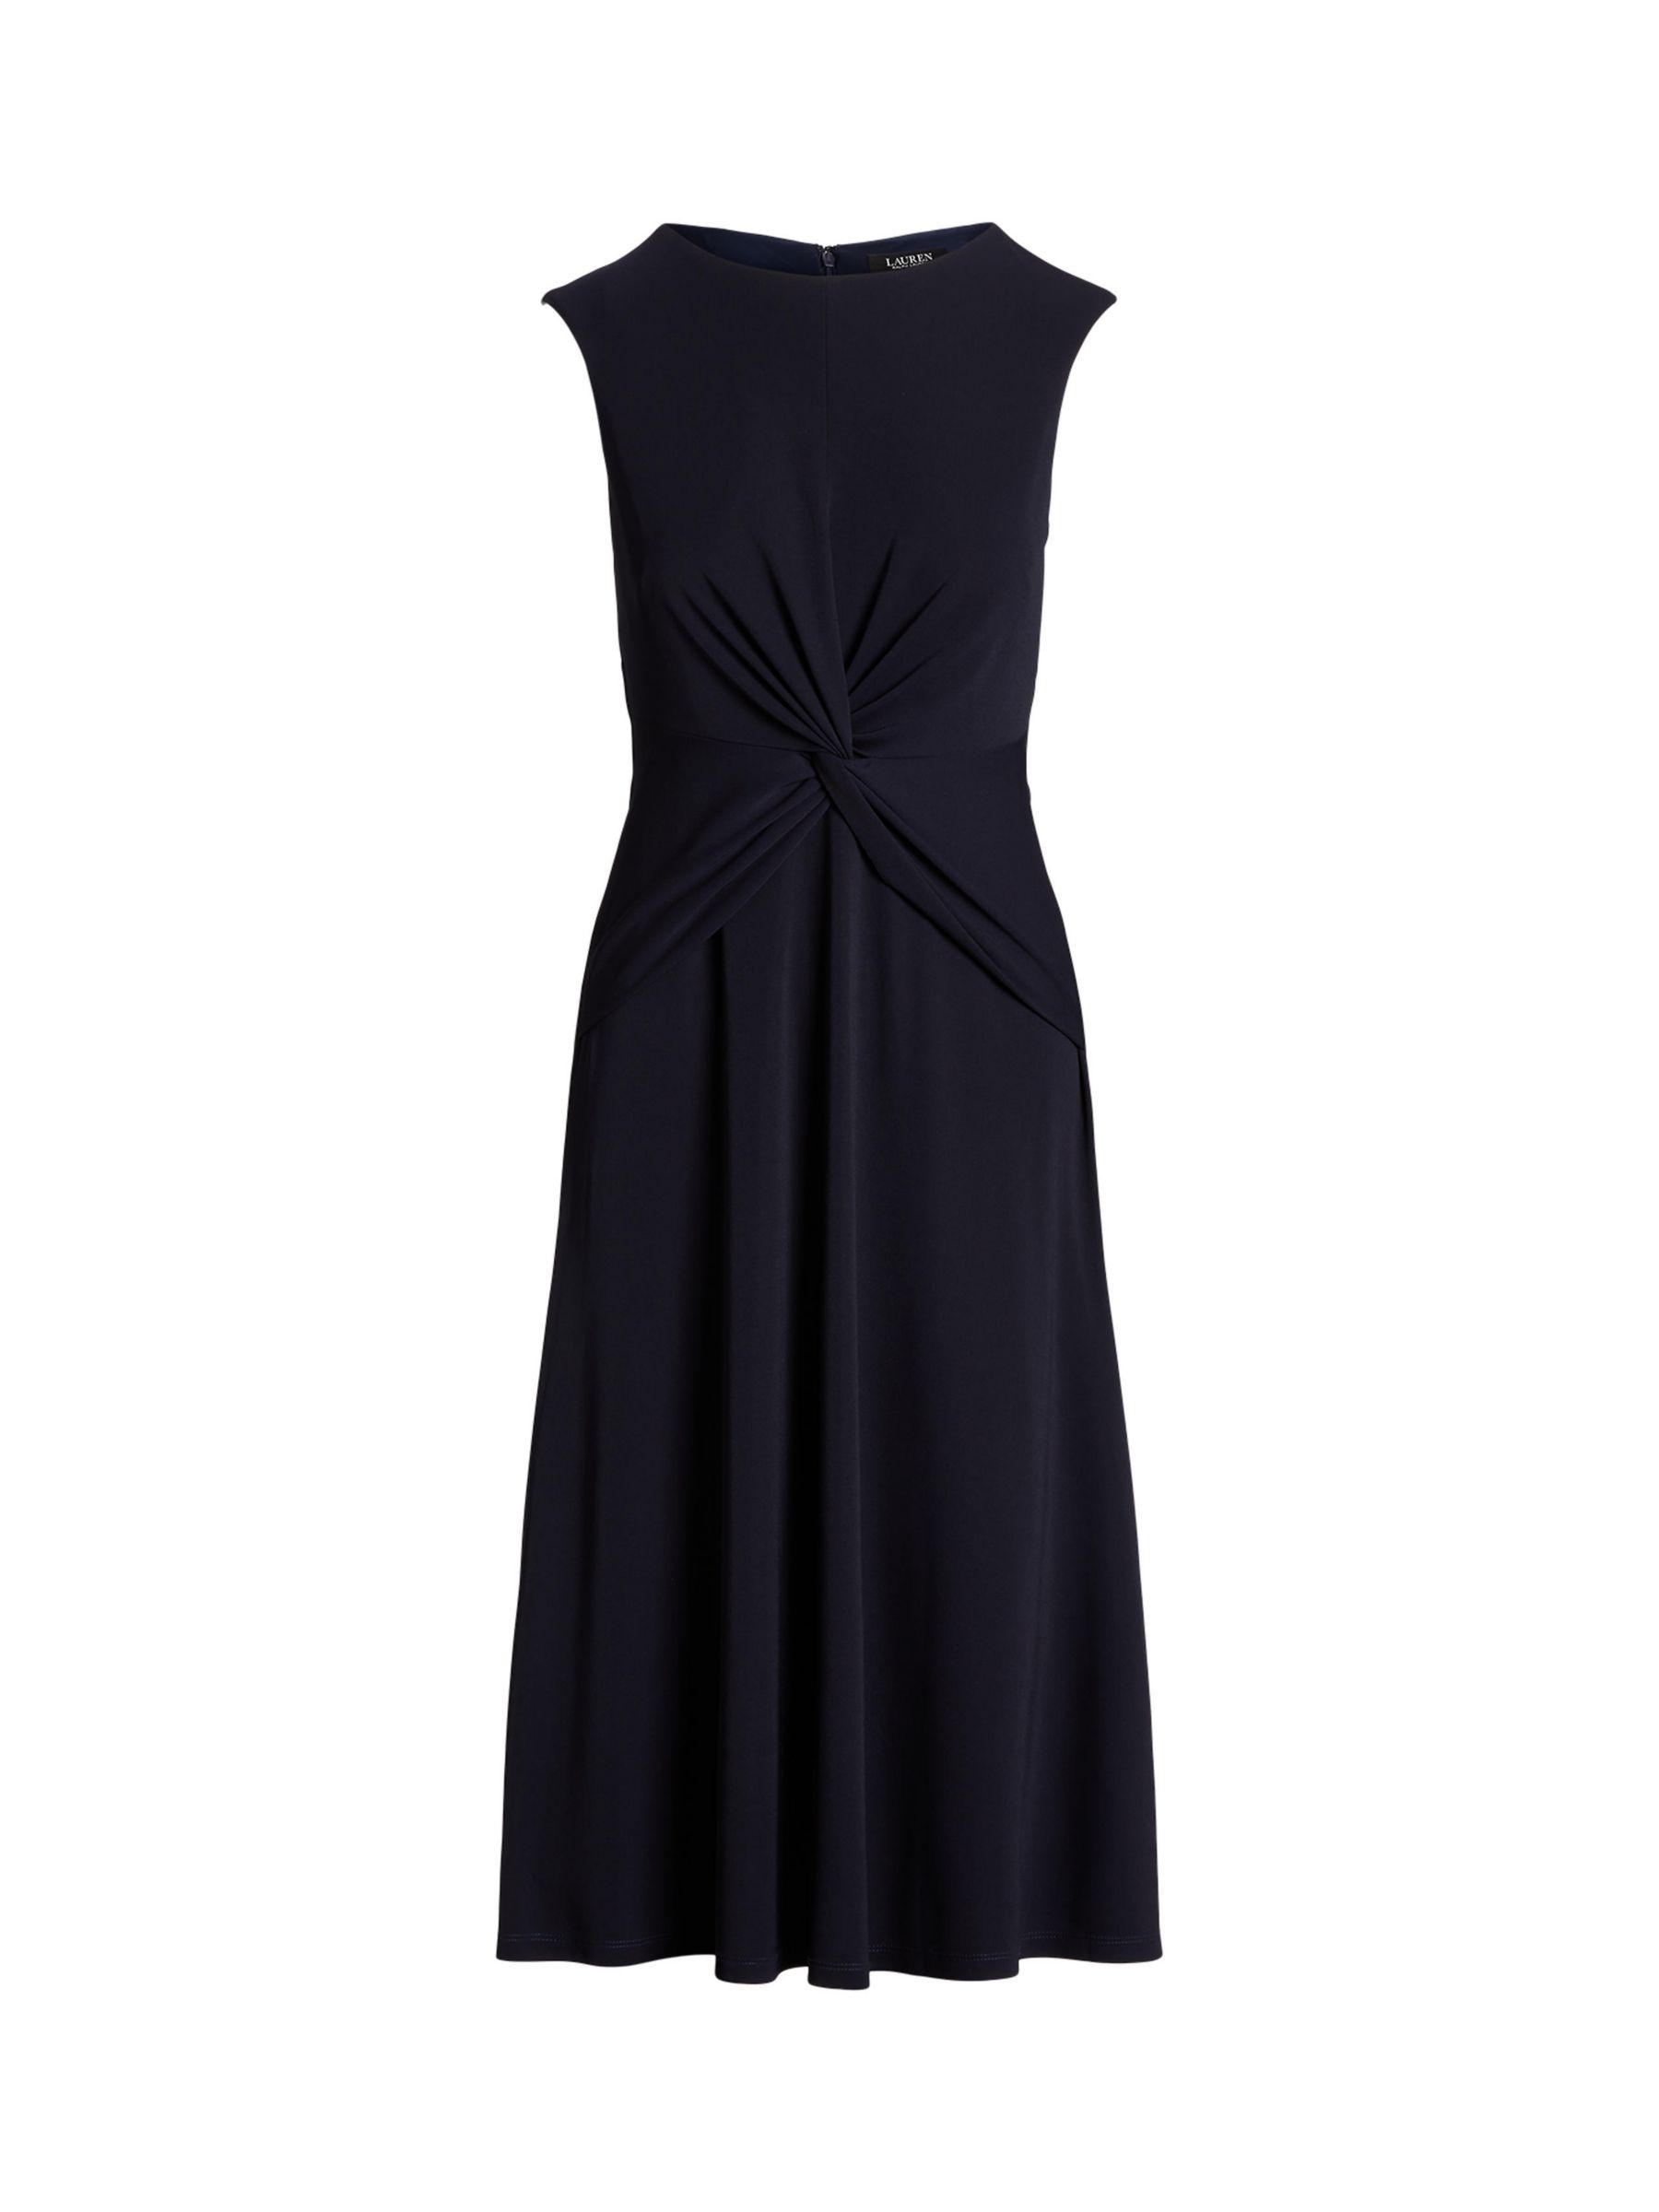 Buy Lauren Ralph Lauren Tessanne Twist Front Jersey Dress, Lighthouse Navy Online at johnlewis.com